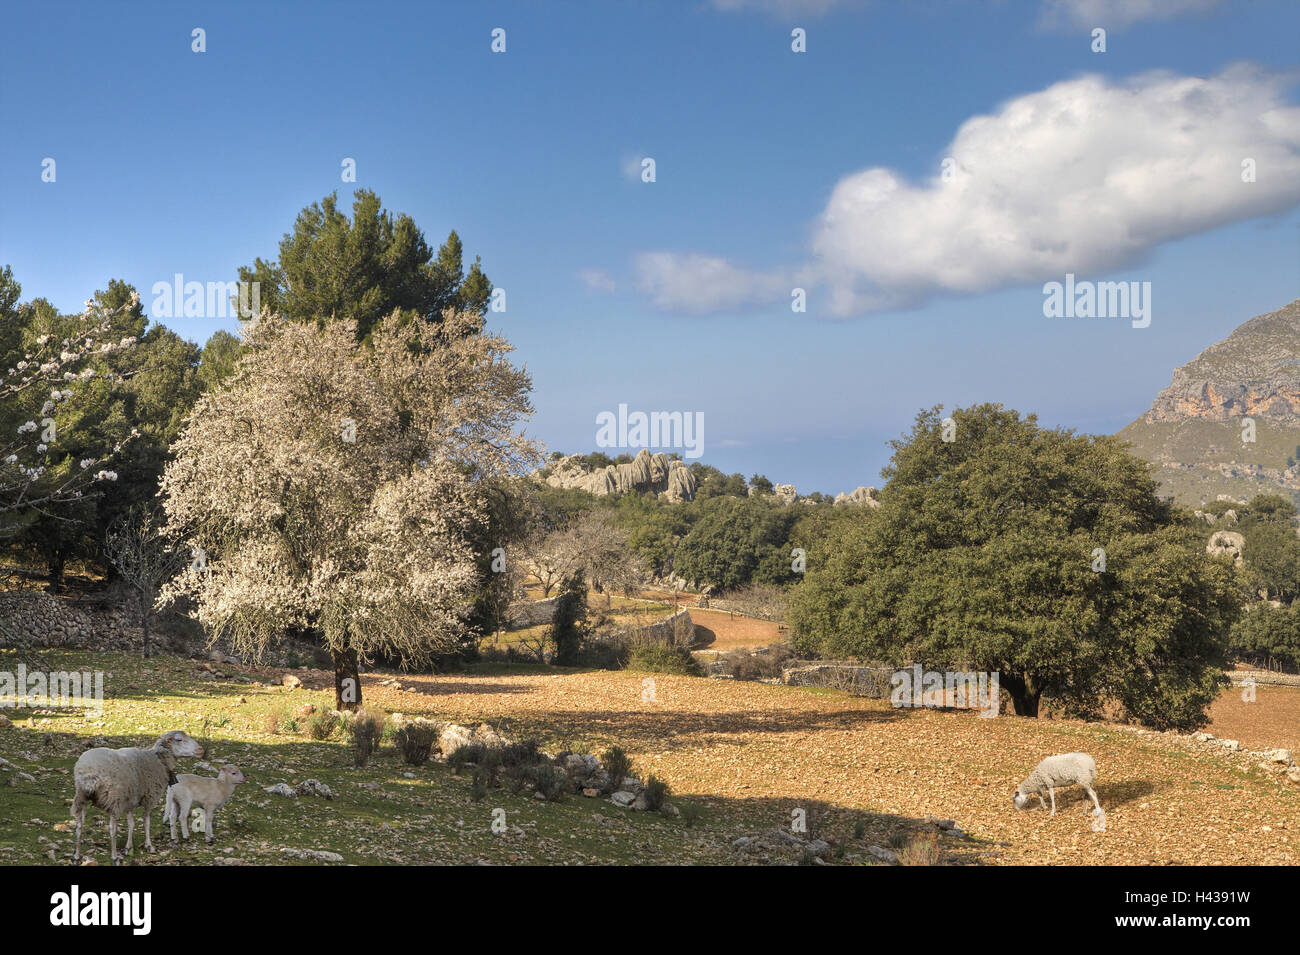 Spain, the Balearic Islands, island Majorca, scenery, sheep, graze, Stock Photo